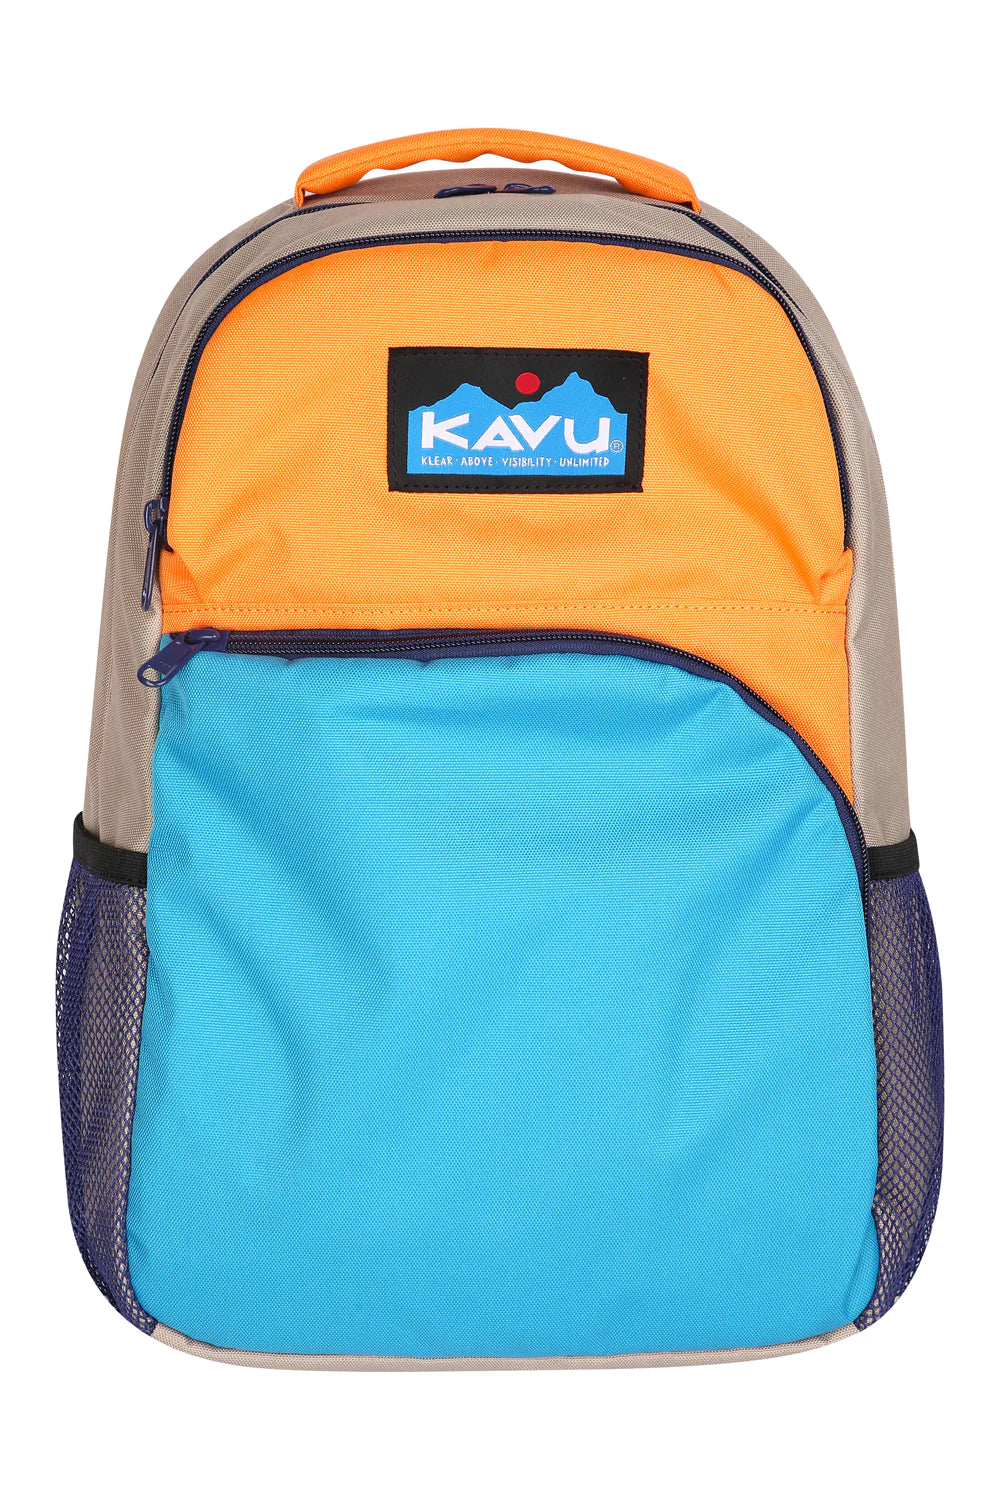 Kavu - Backpack Packwood Jamboree